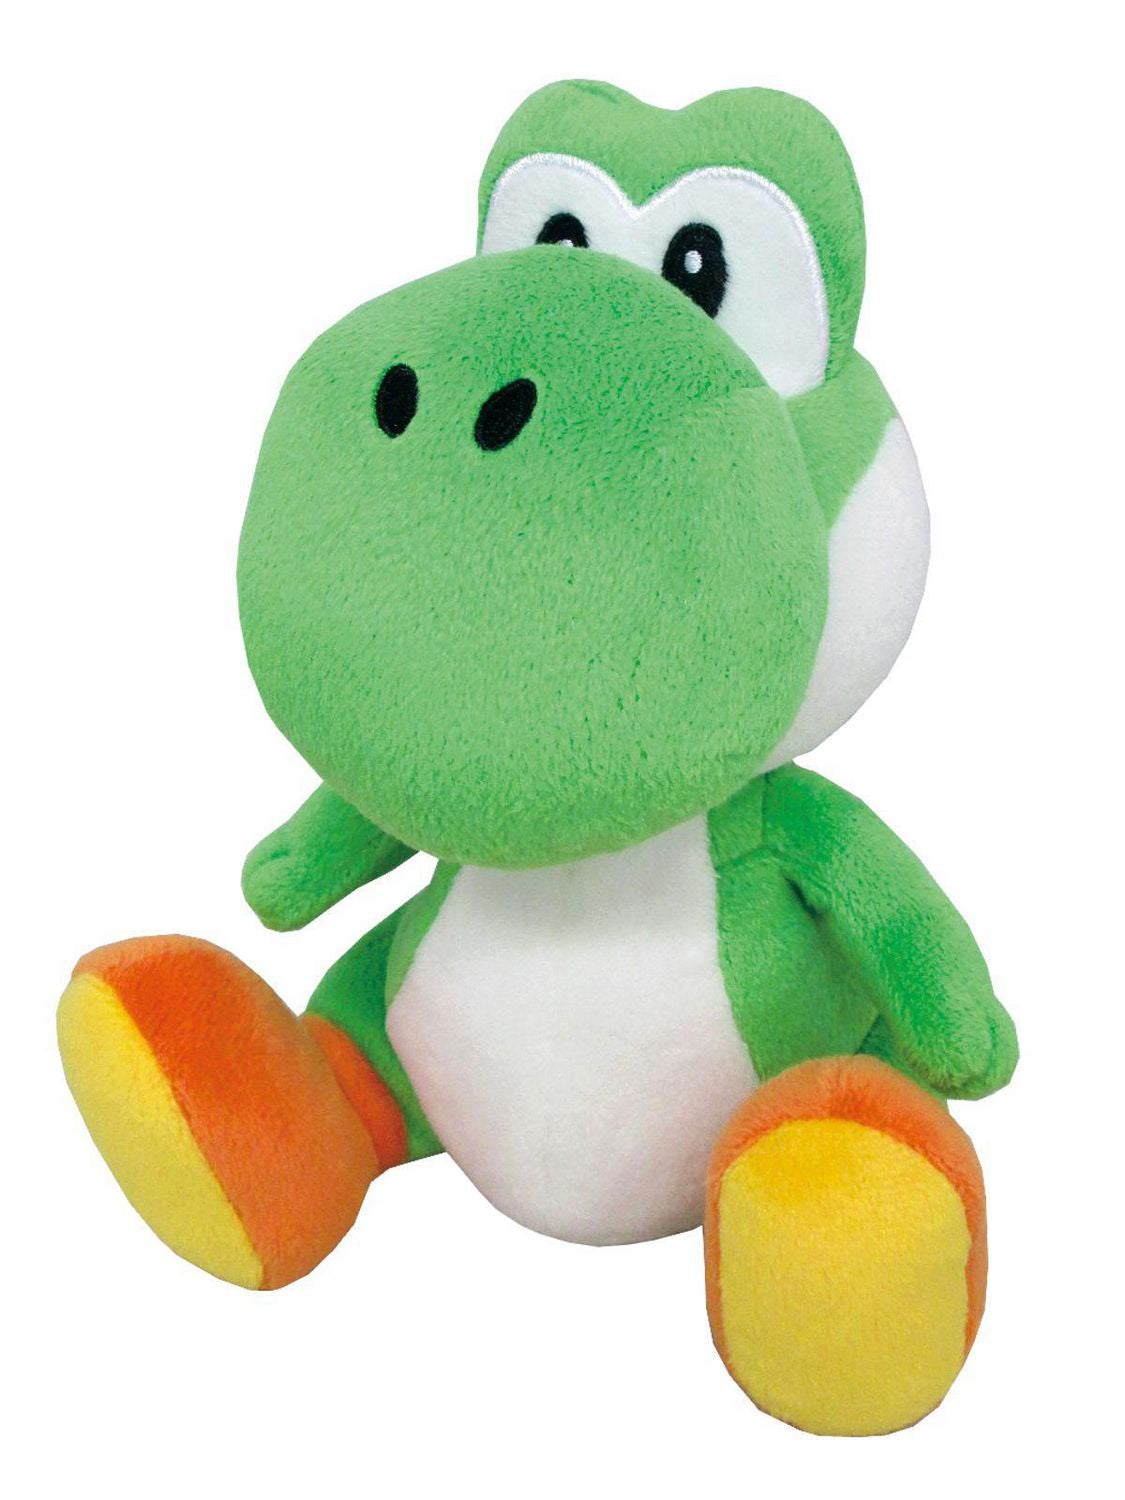 Super Mario All Star Green Yoshi 8″ Plush [Little Buddy]